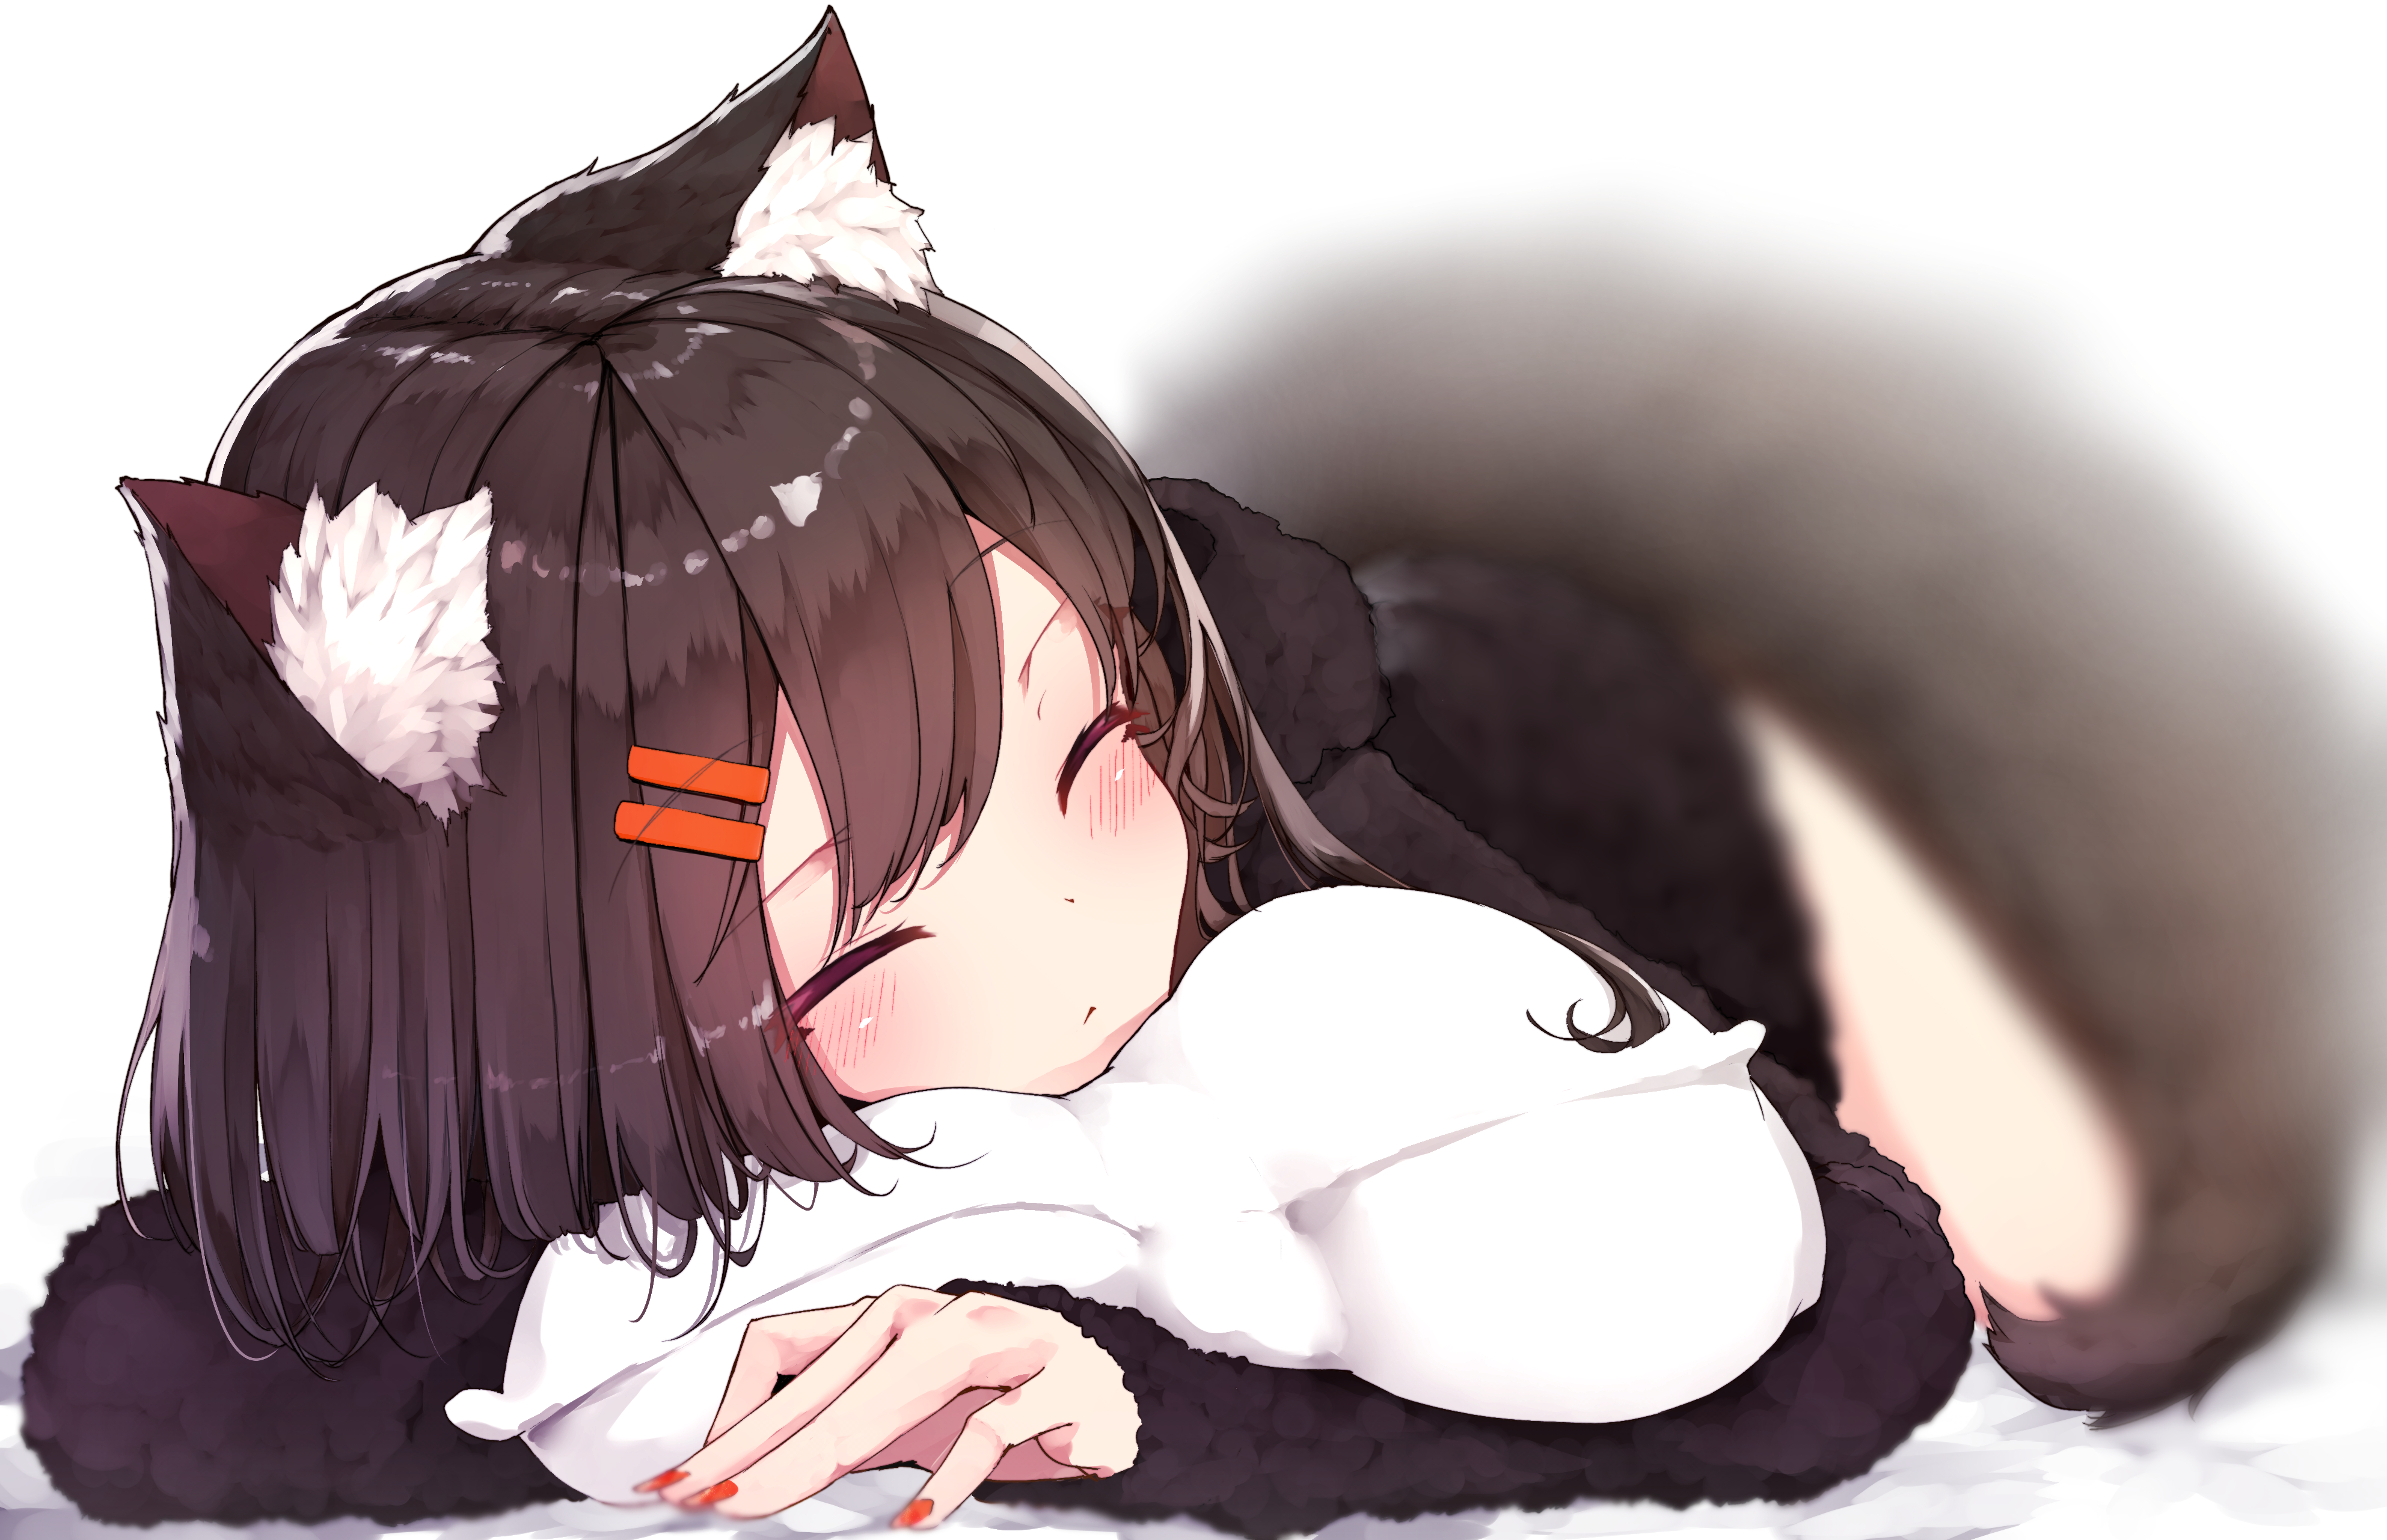 Anime 3970x2562 anime anime girls digital art artwork 2D portrait display Mayogii sleeping pillow pillow hug brunette animal ears fox girl tail blushing